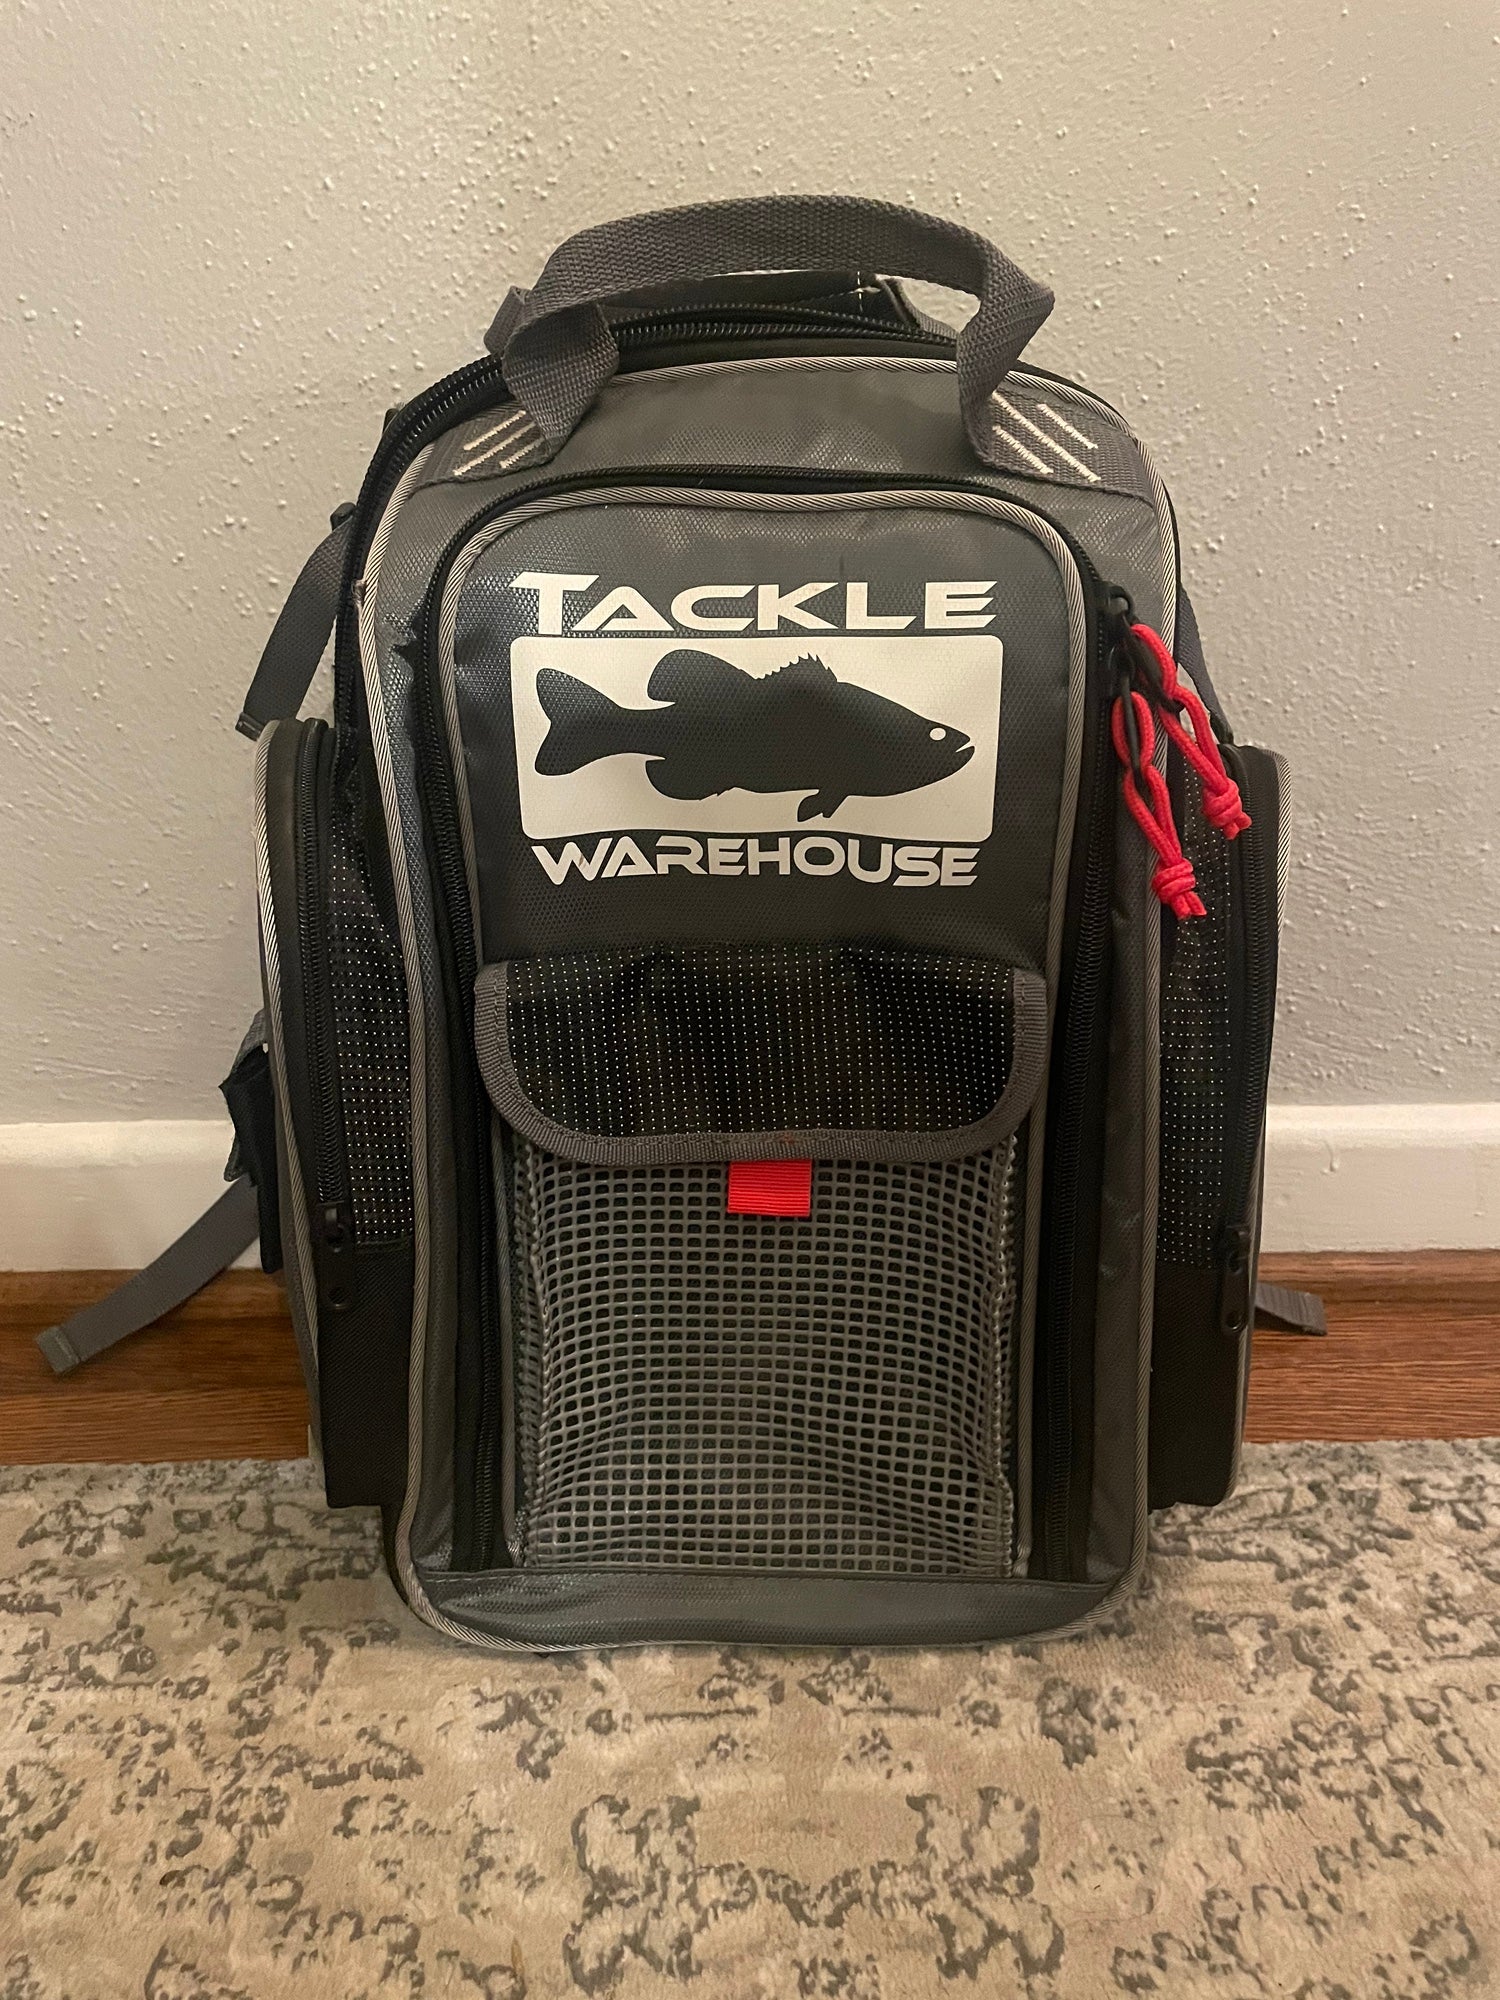 Tacklewarehouse Anglers Backpack Review 